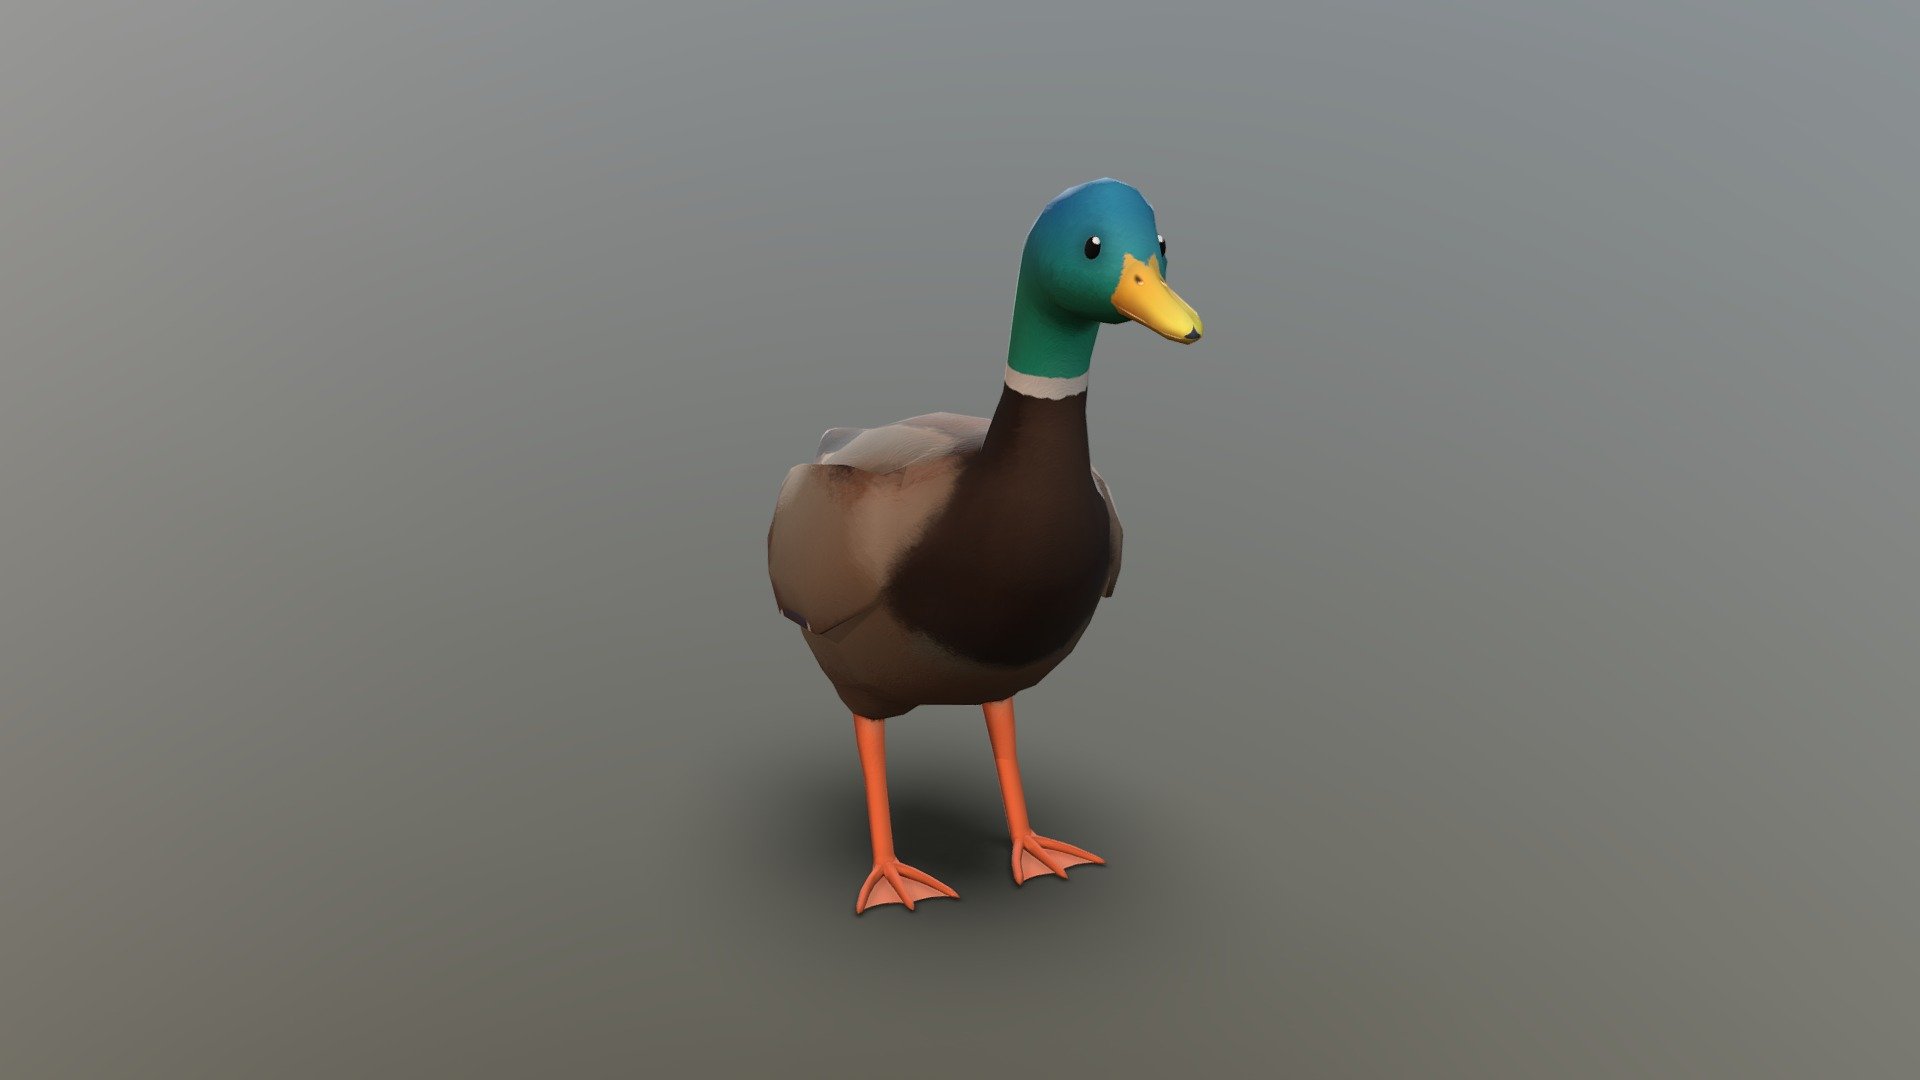 3D Suicide Duck - 4 1/4 / Mallard